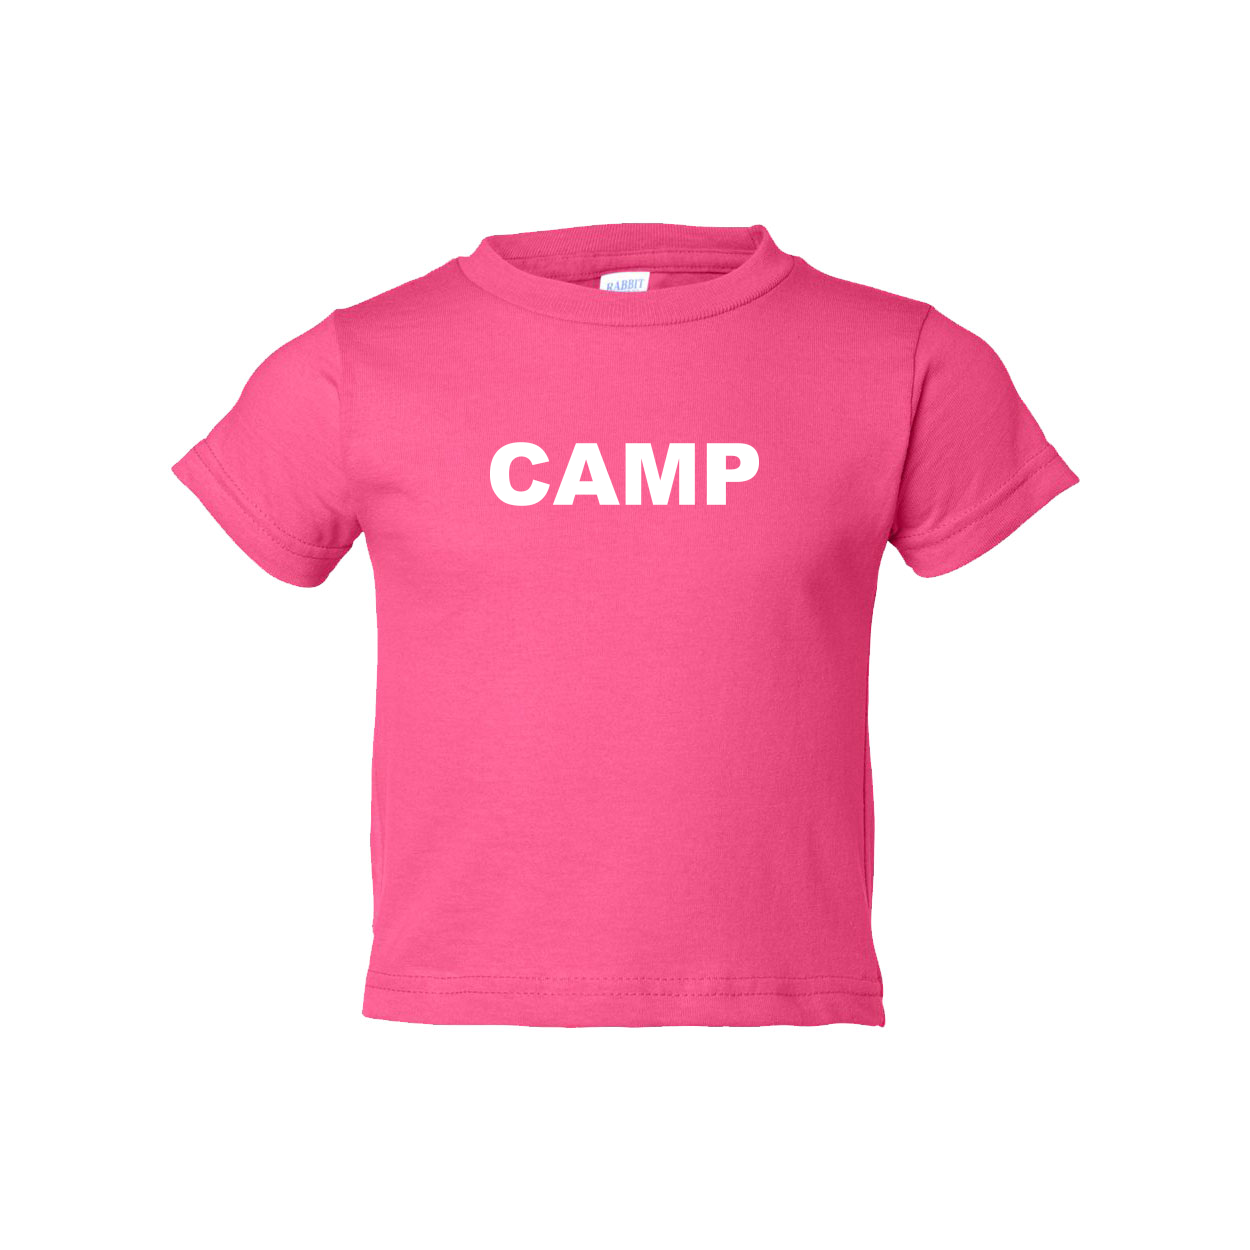 Camp Brand Logo Classic Toddler T-Shirt Pink